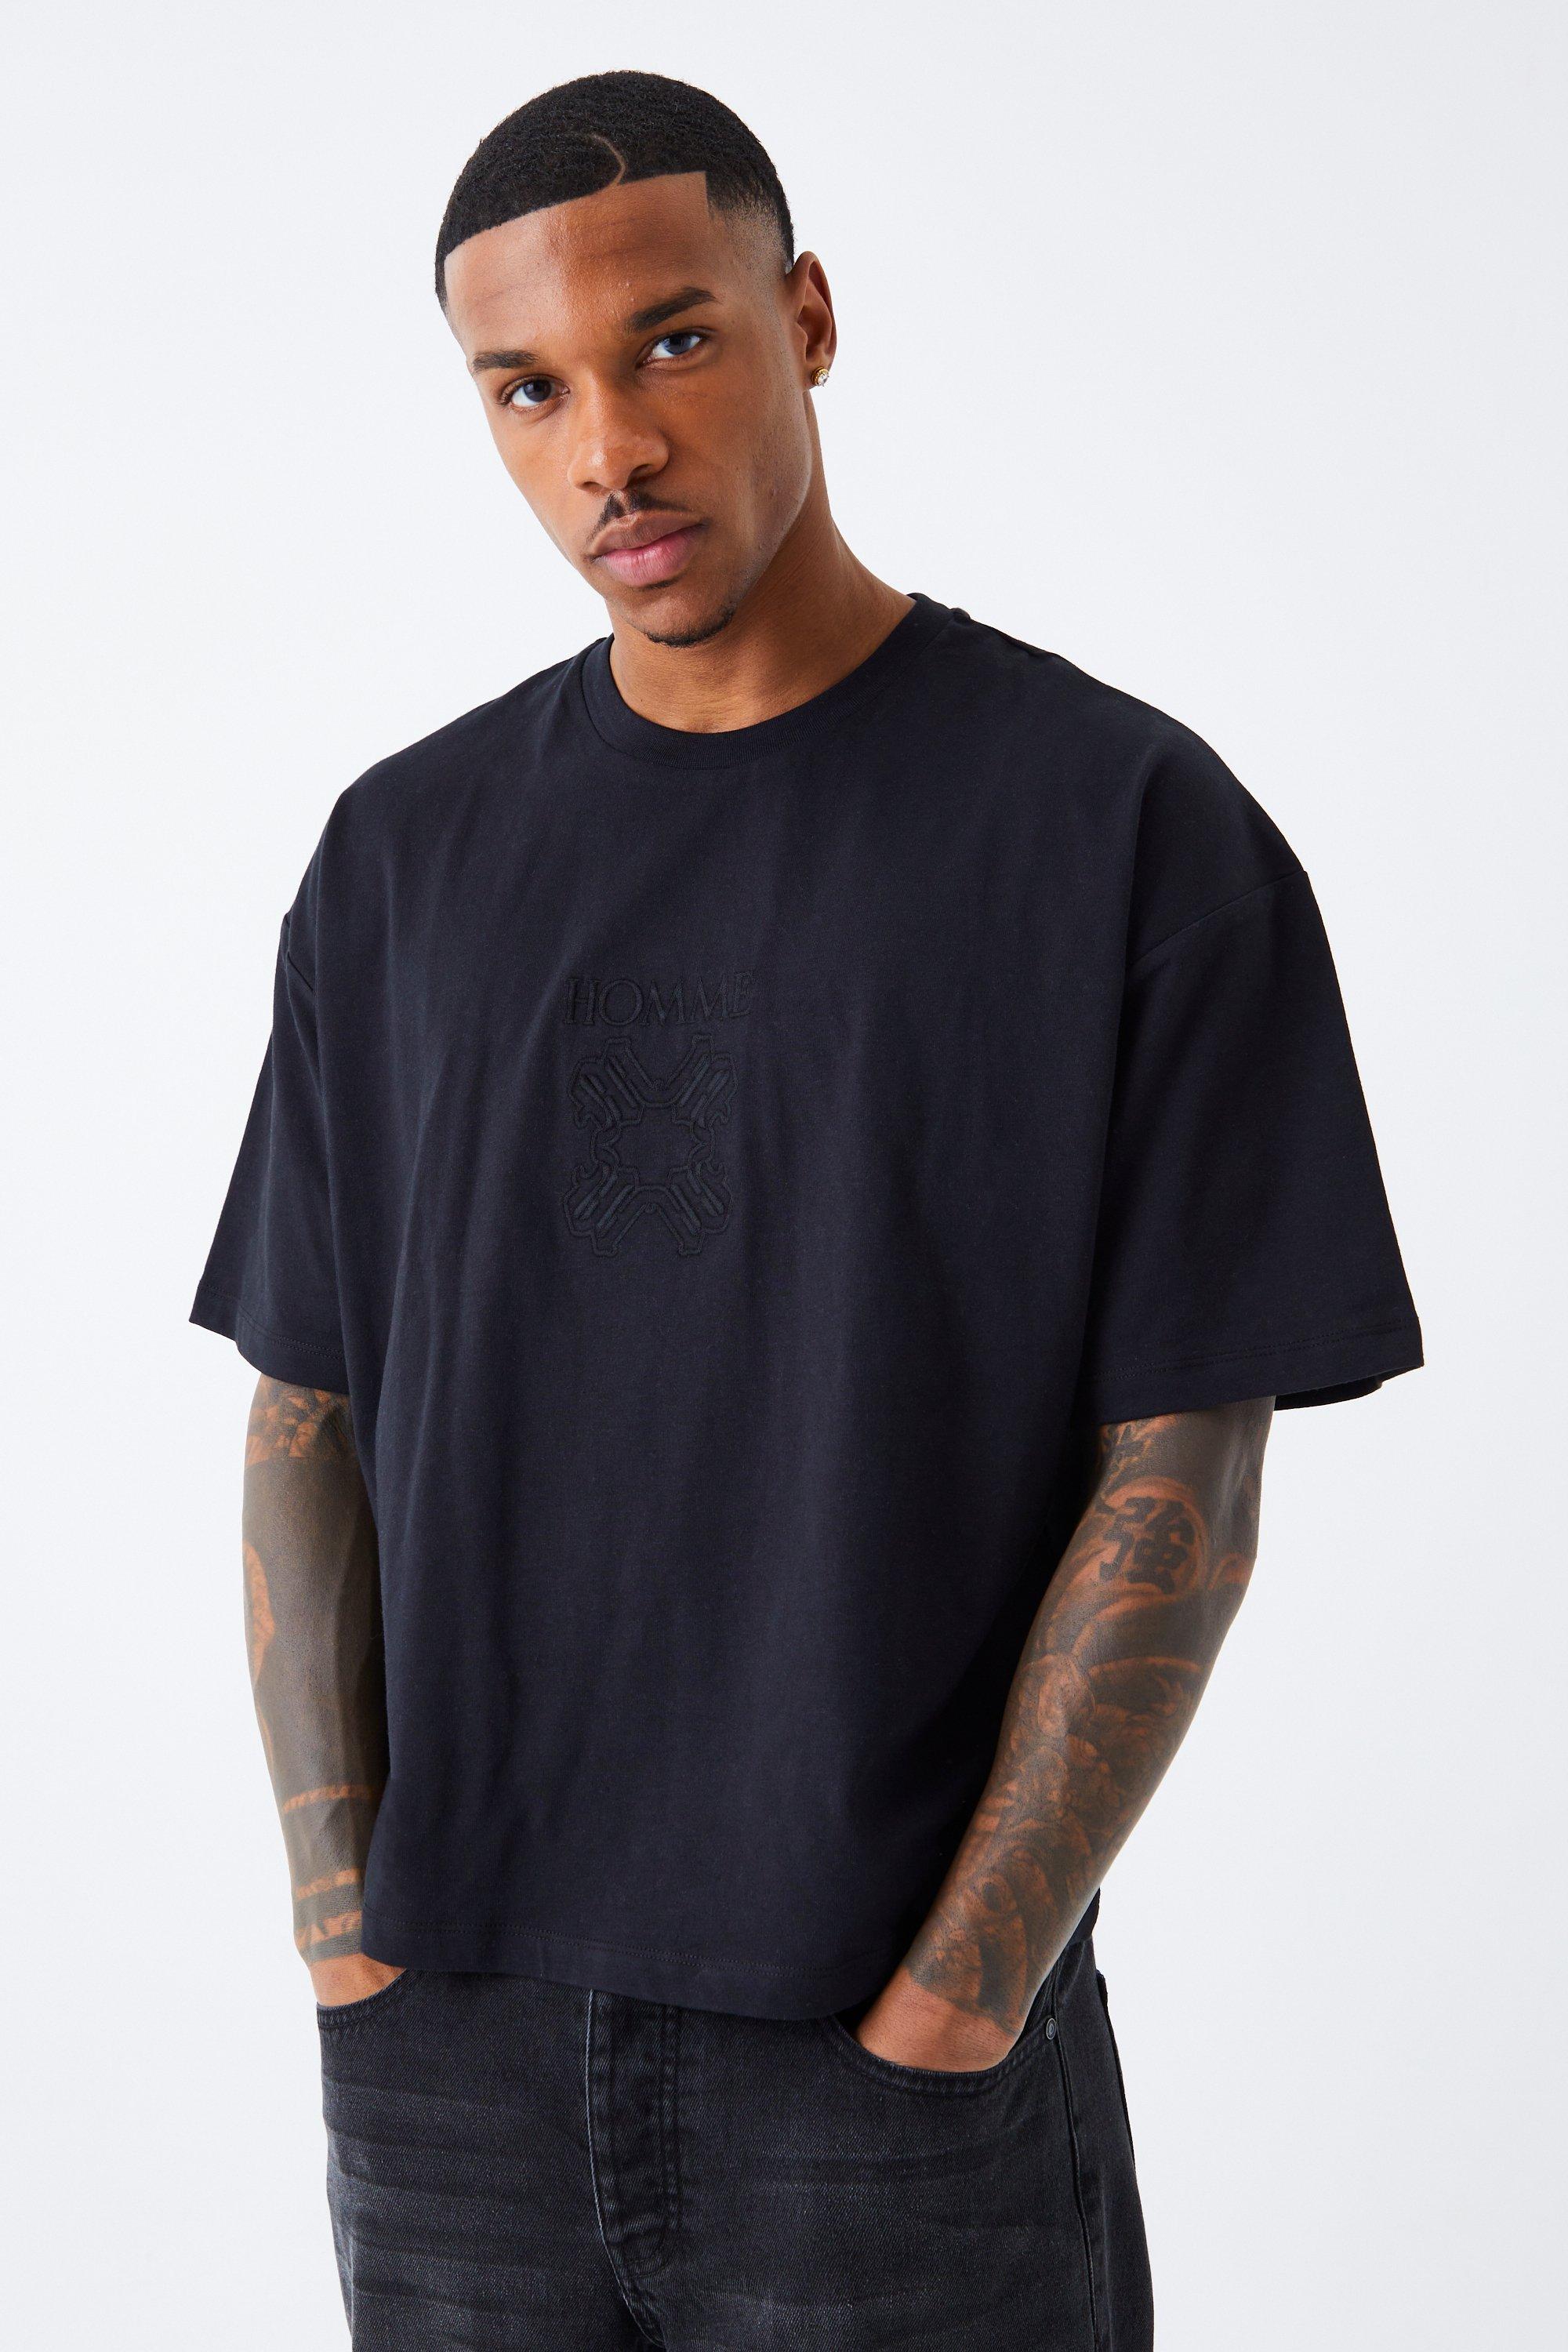 Men's Boxy Homme Embroidered T-Shirt - Black - S, Black